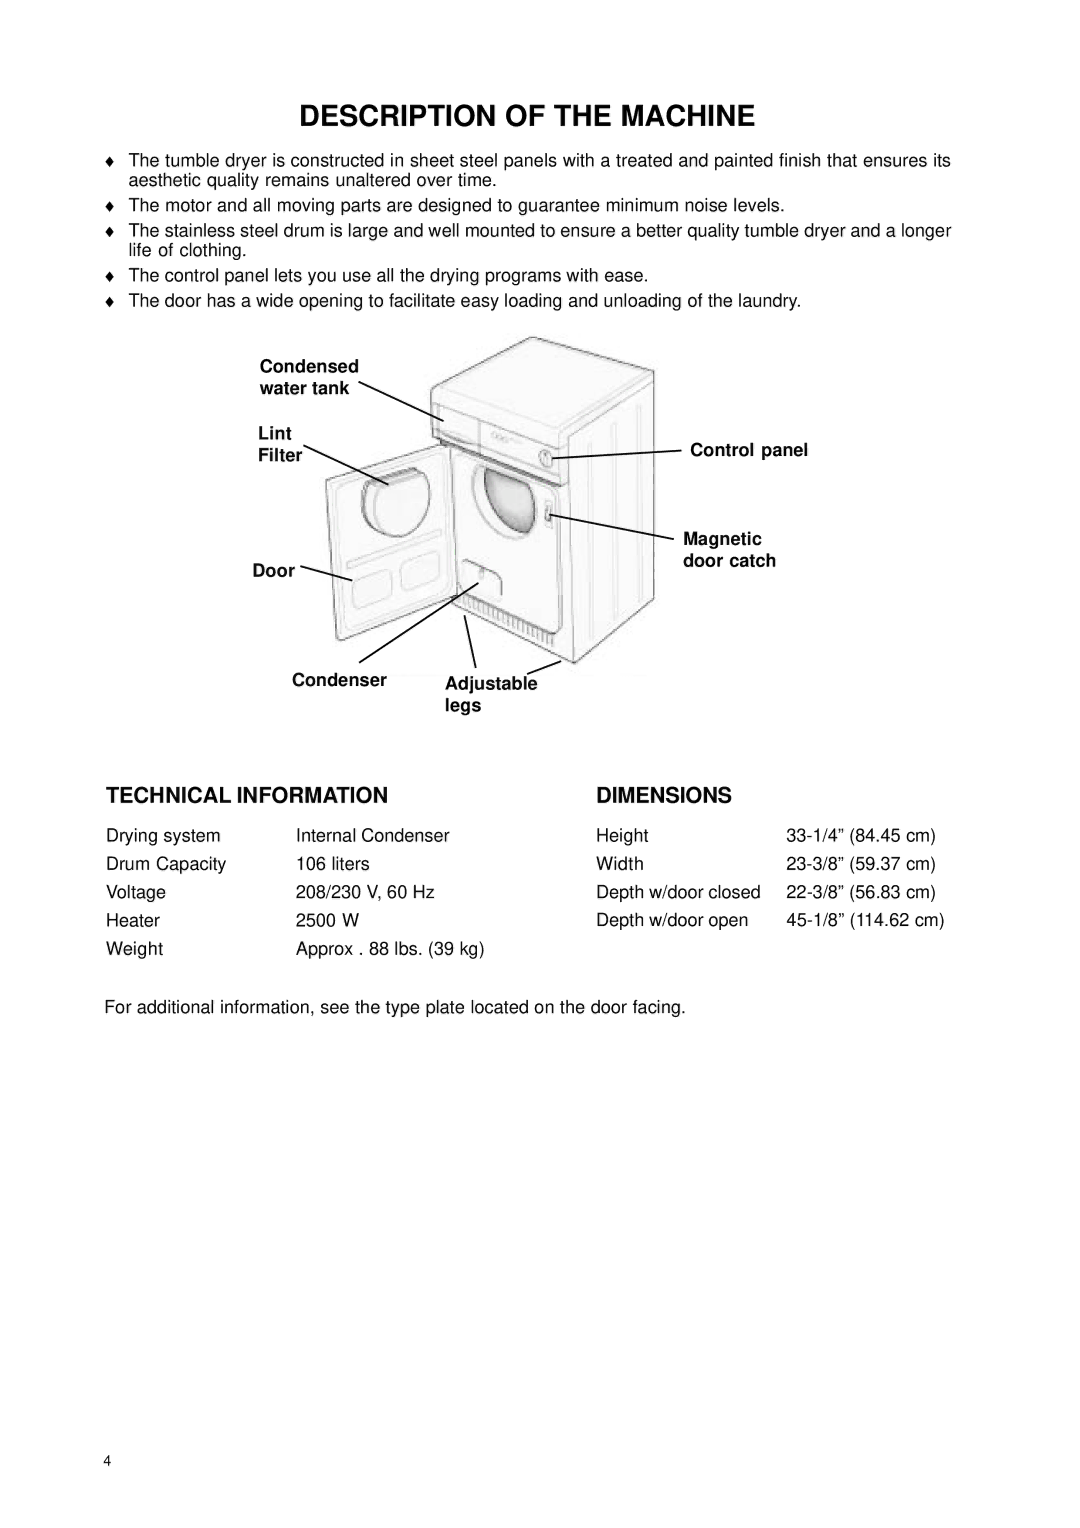 Eurotech Appliances EDC158 owner manual Description of the Machine, Technical Information Dimensions 